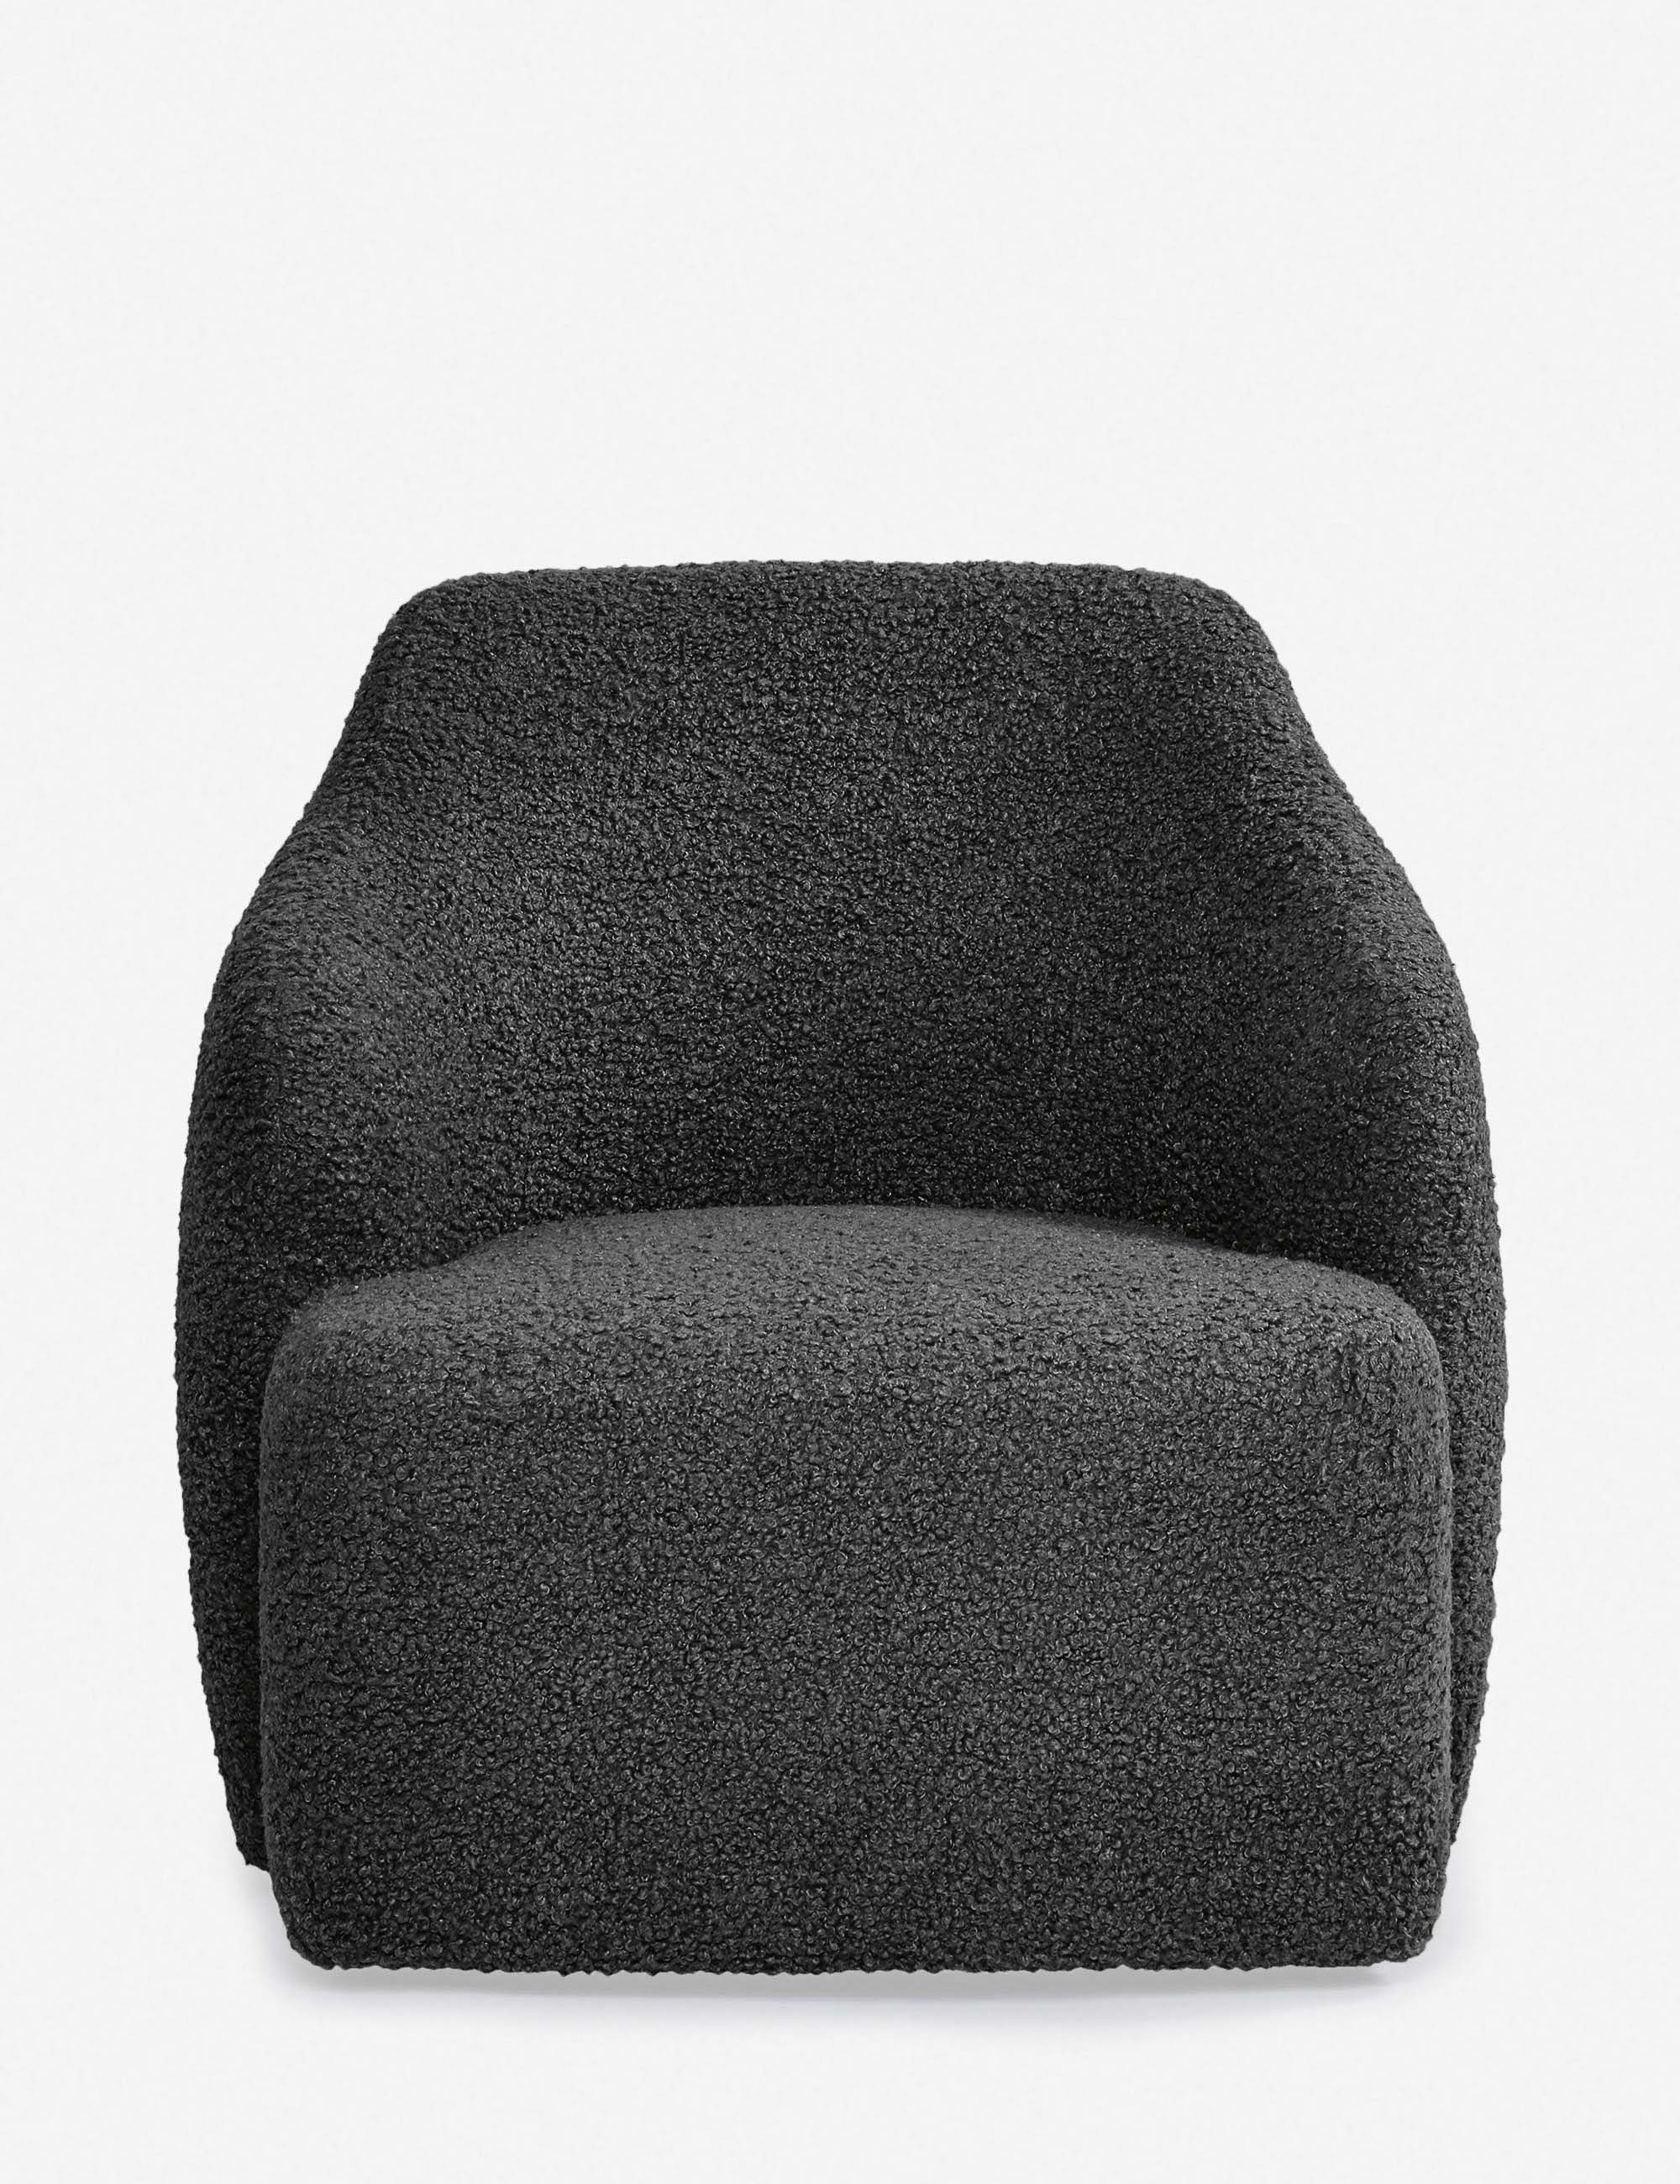 Tobi Swivel Chair - Image 0